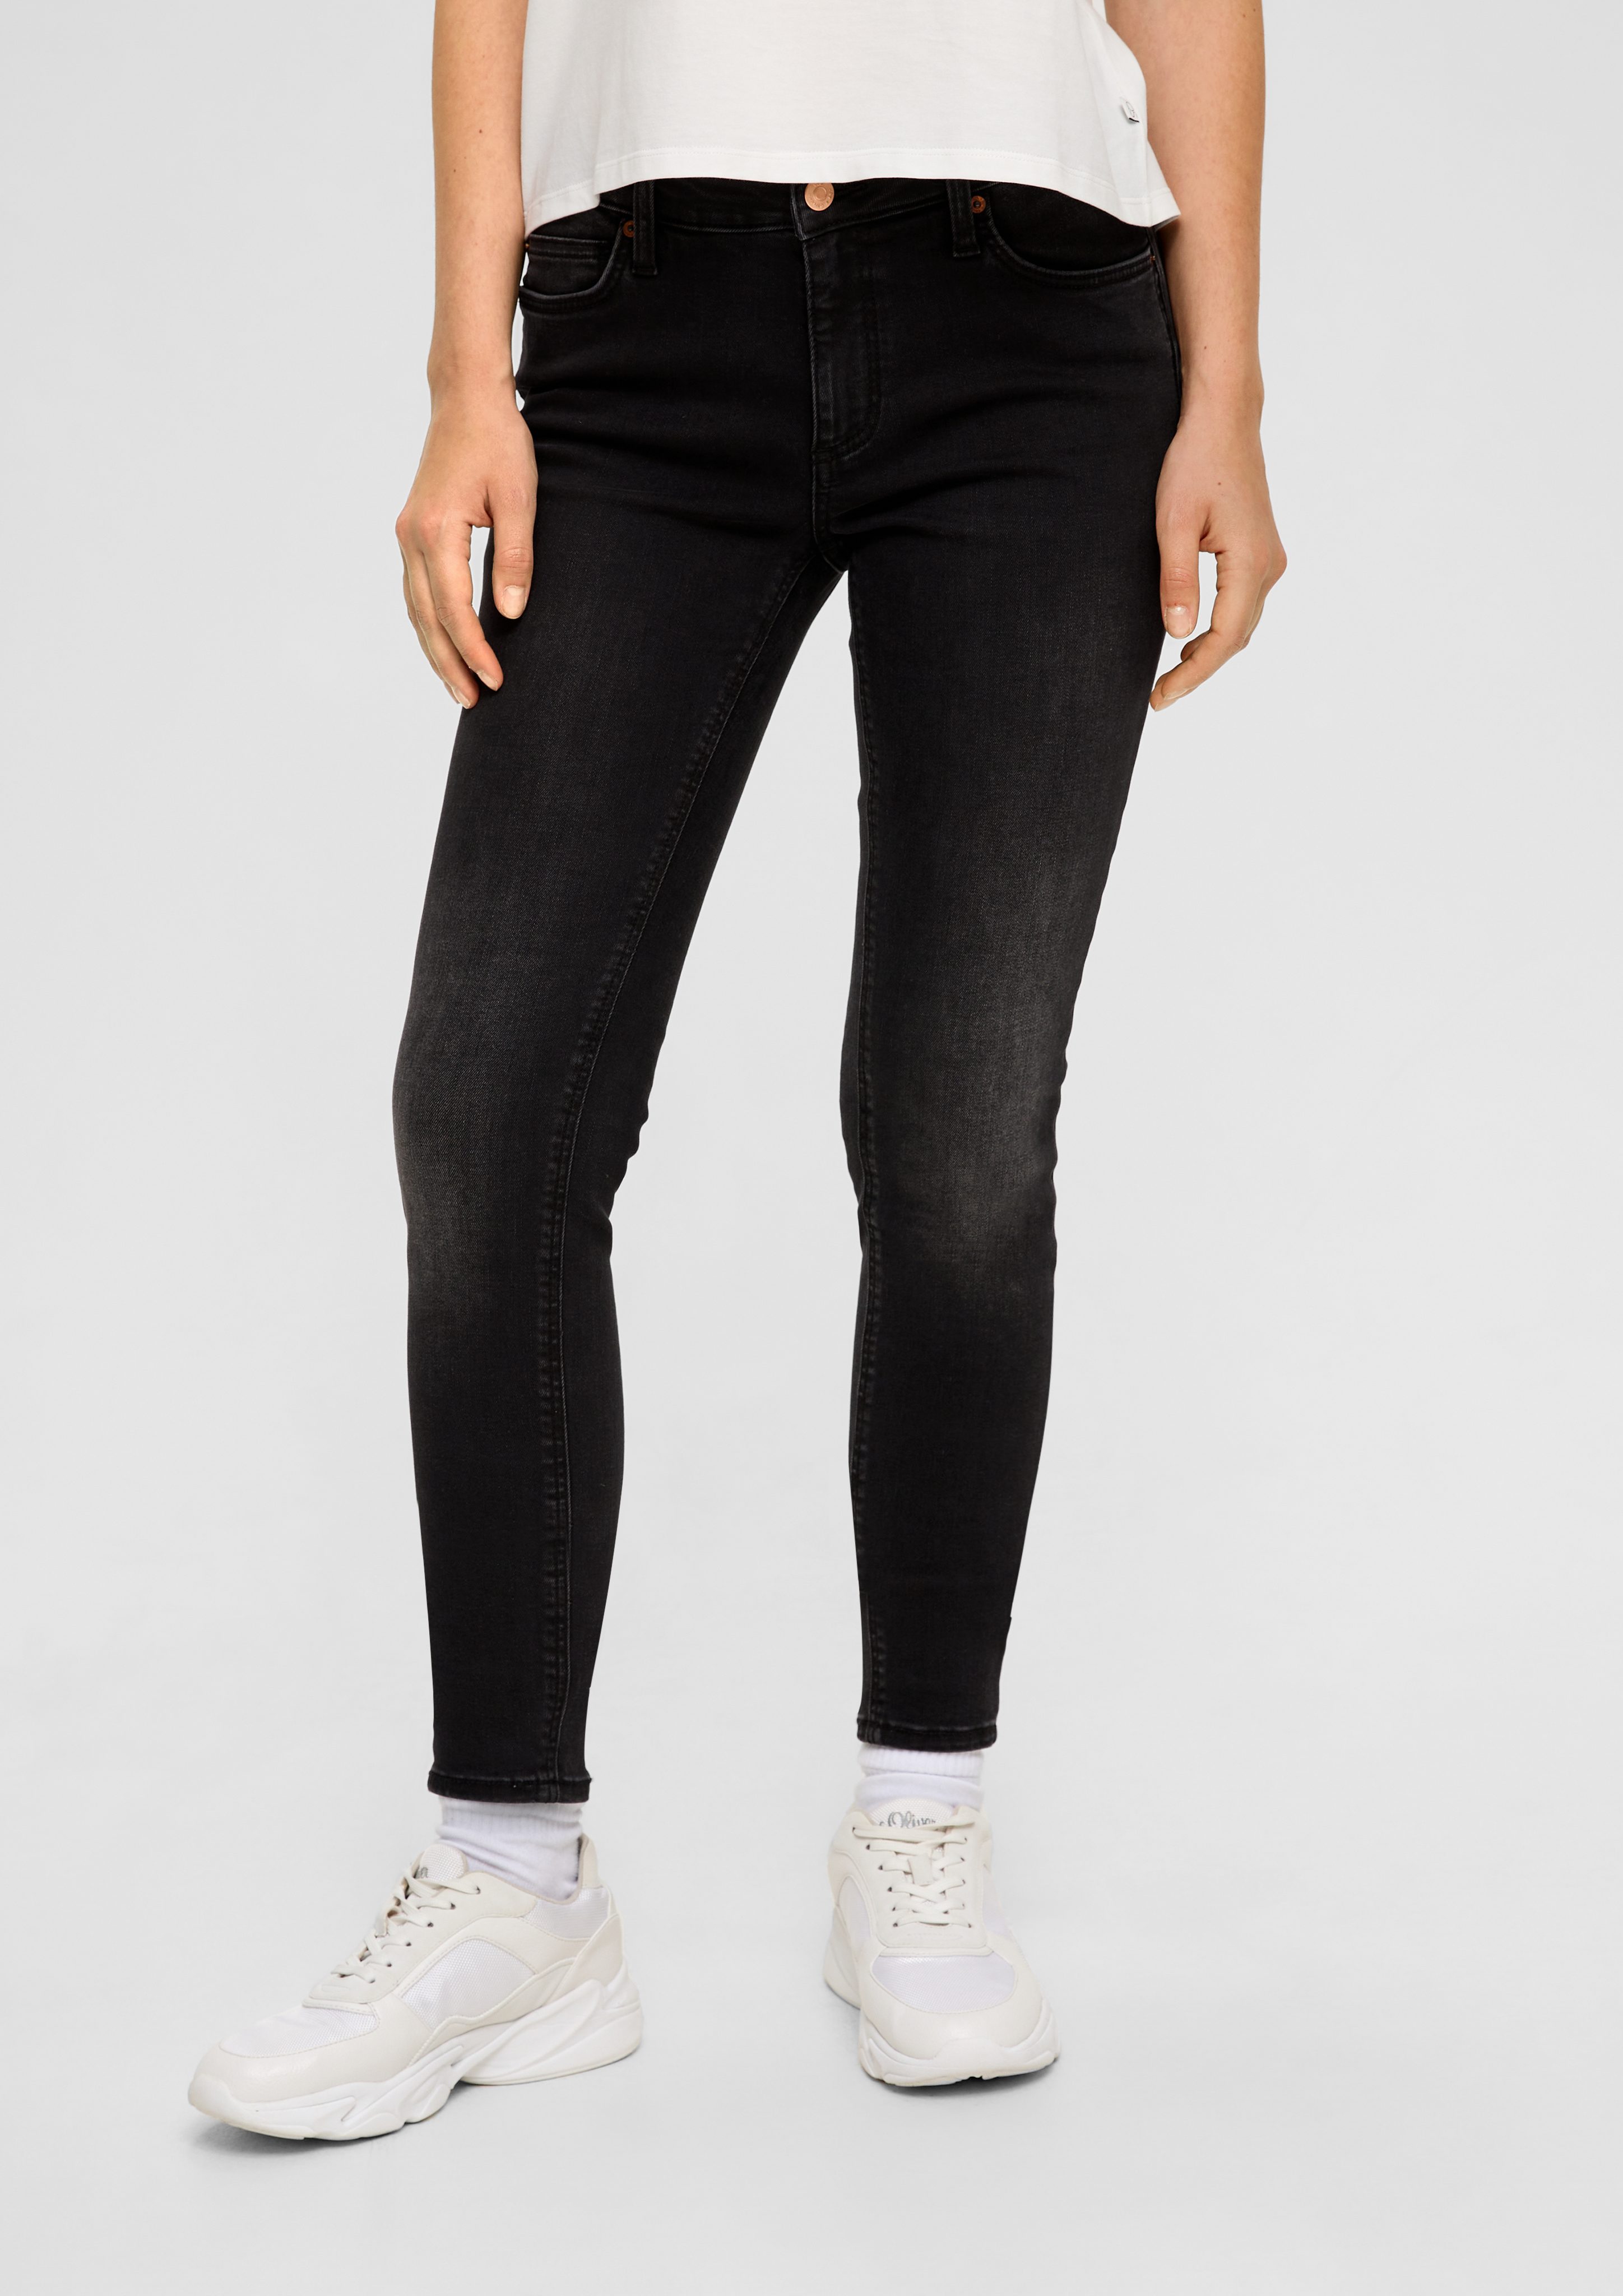 QS Stoffhose Jeans Sadie / / Mid Skinny Label-Patch, Fit / Rise dunkelgrau Leg Skinny Logo